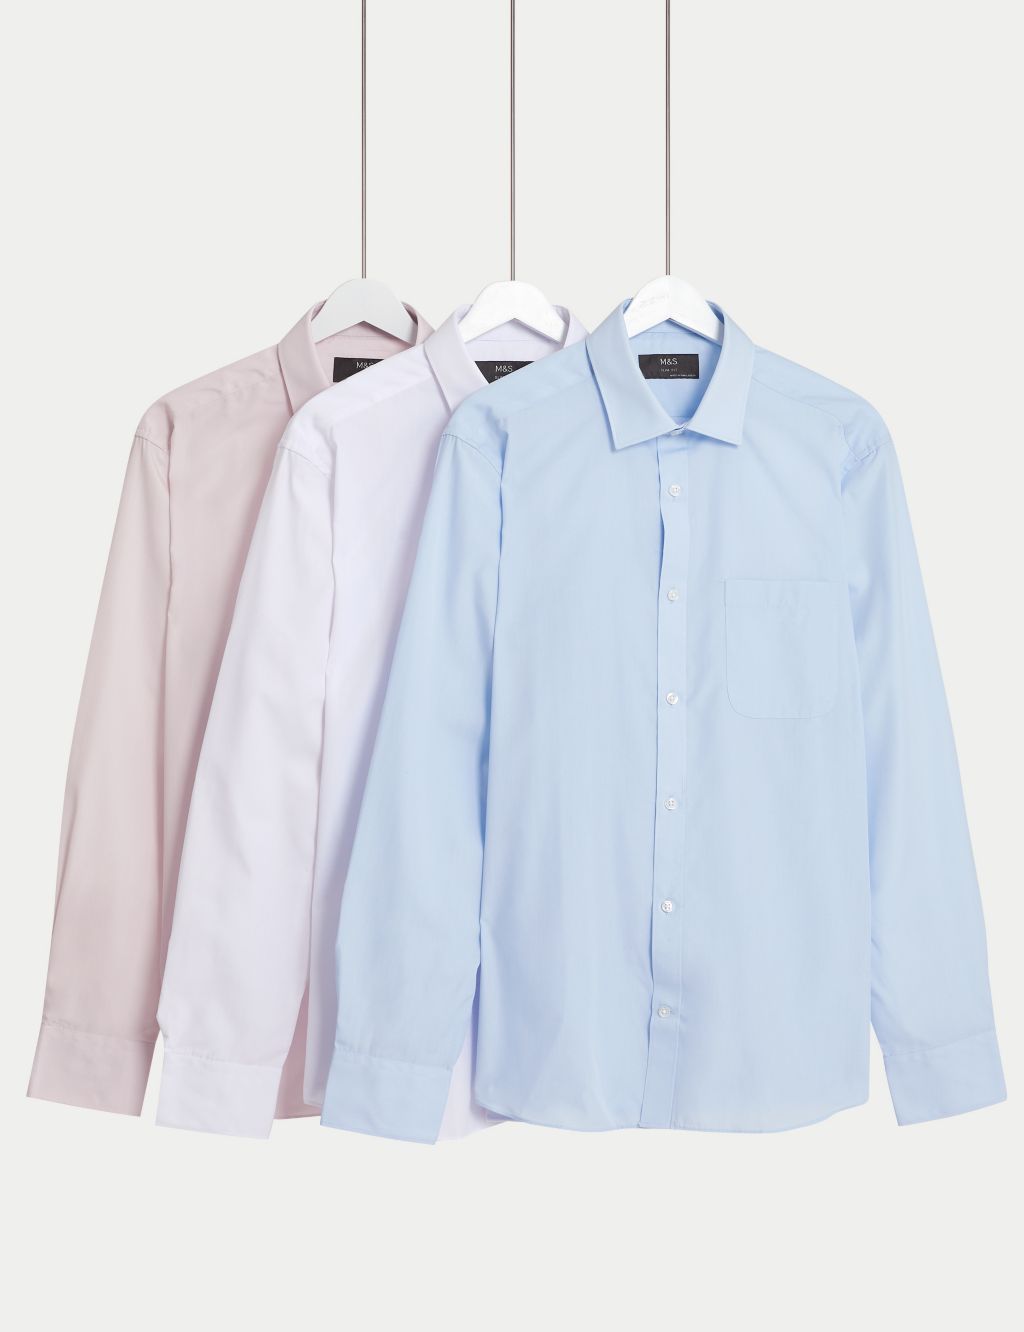 3pk Slim Fit Easy Iron Long Sleeve Shirts image 1